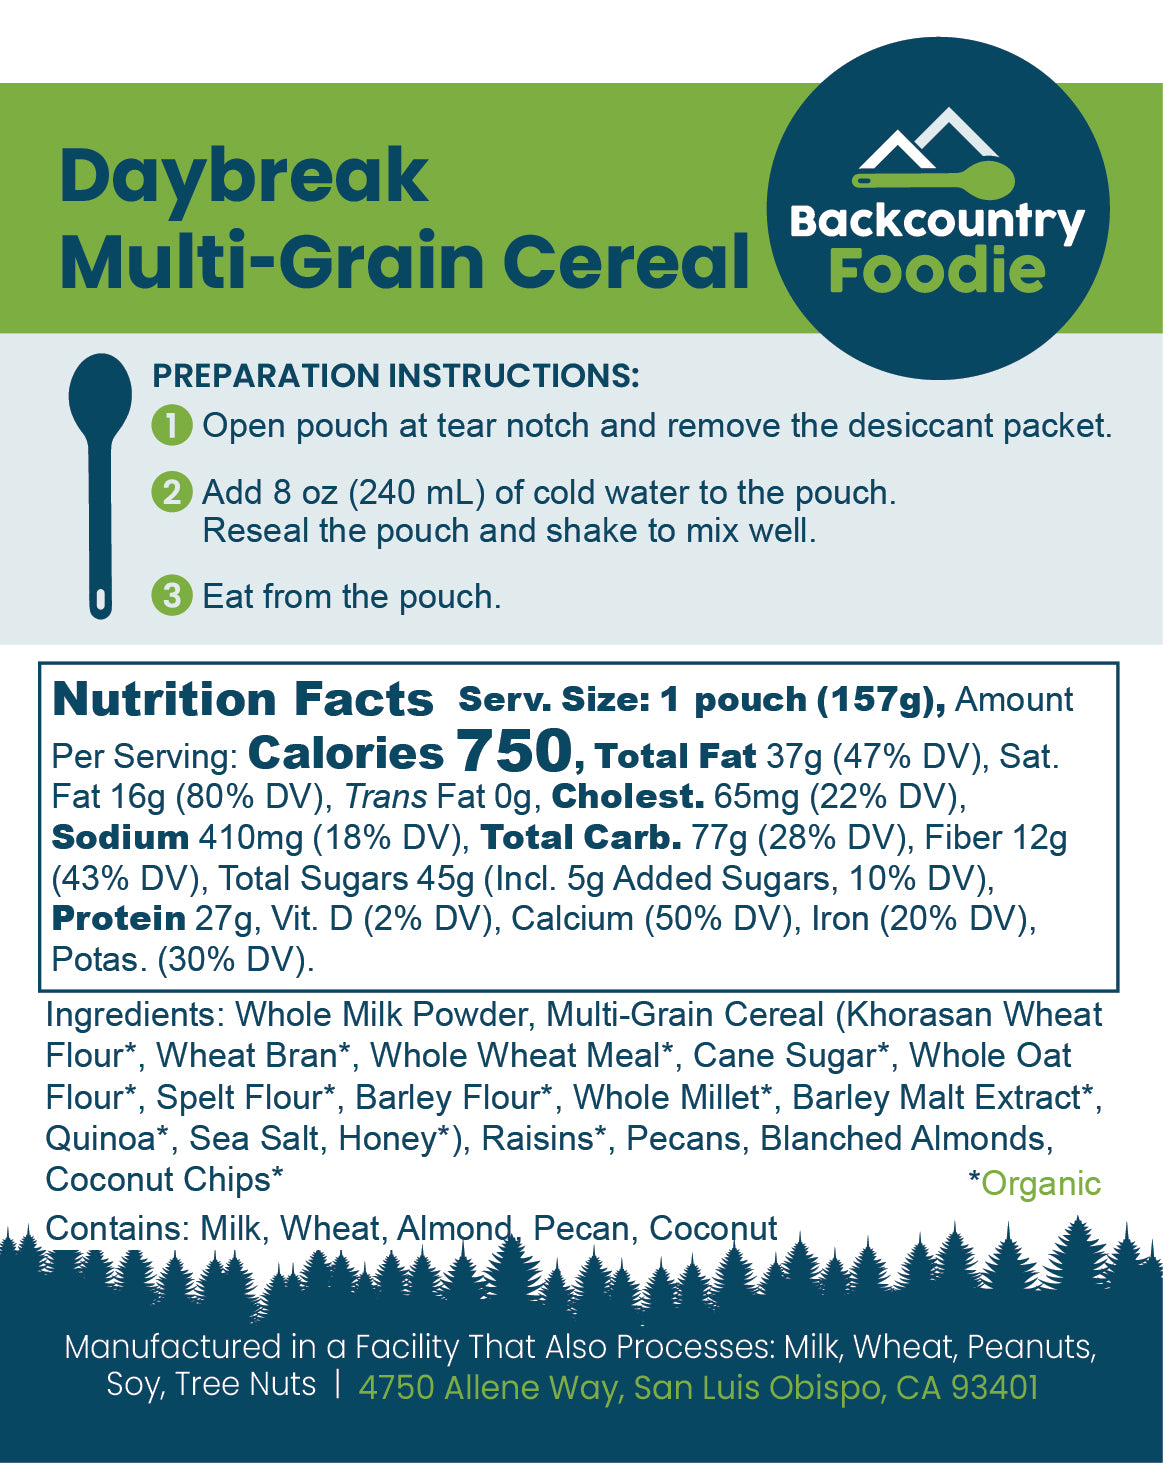 Backcountry Foodie - Daybreak Multi-Grain Cereal